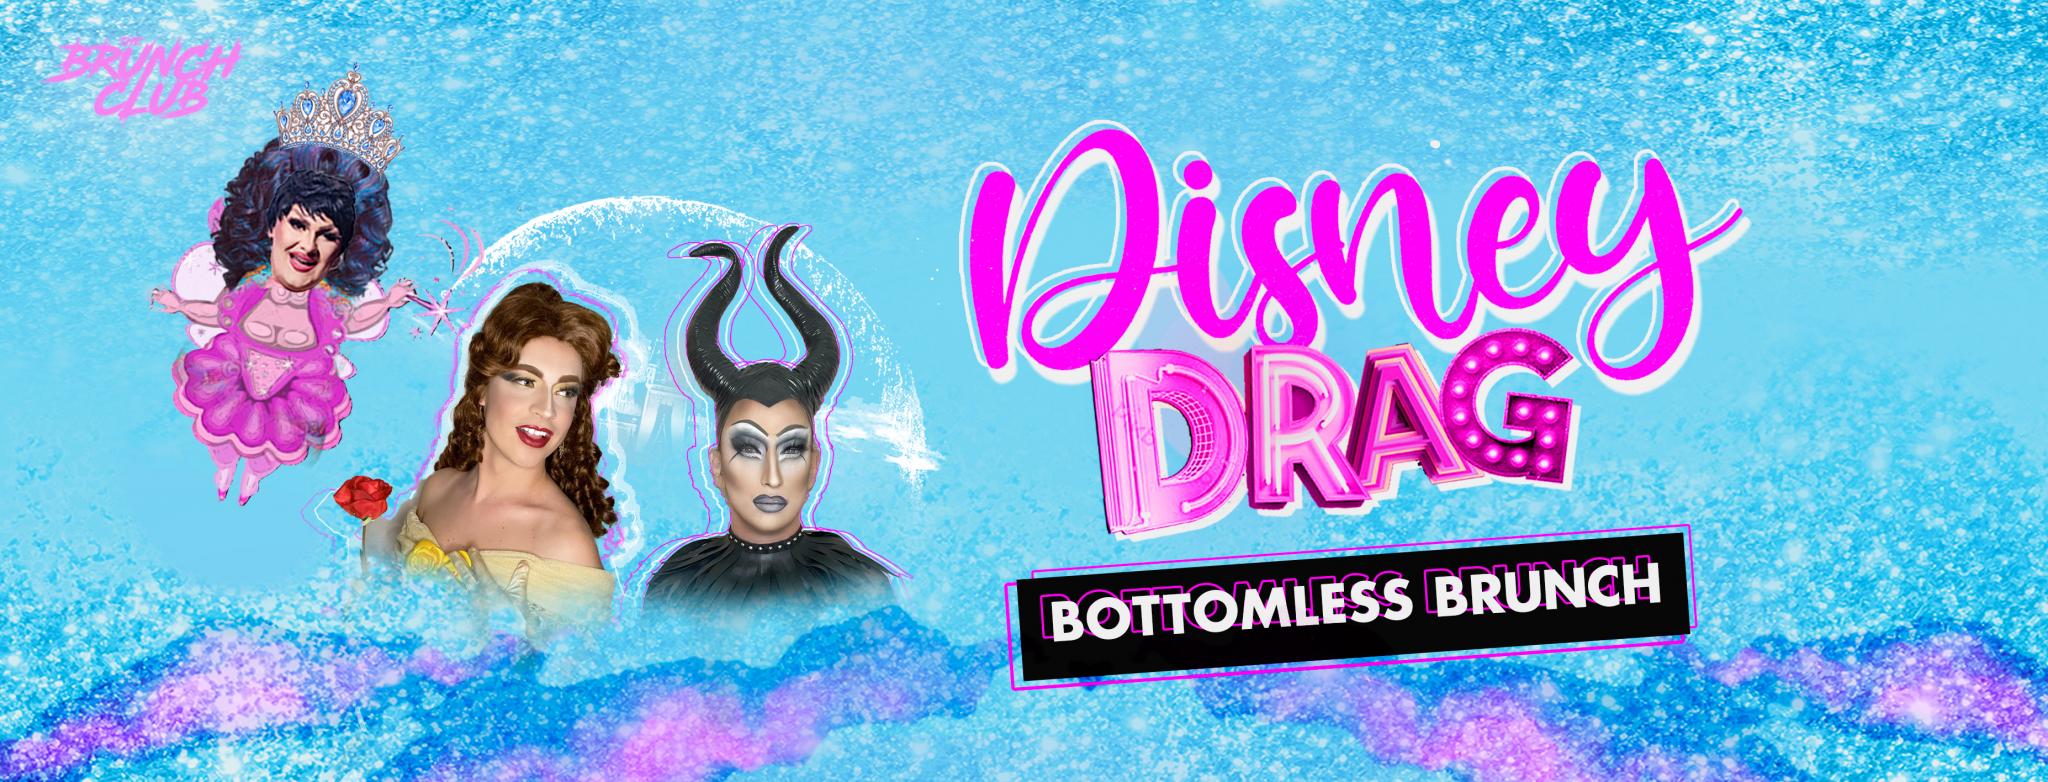 Disney Drag Bottomless Brunch - London